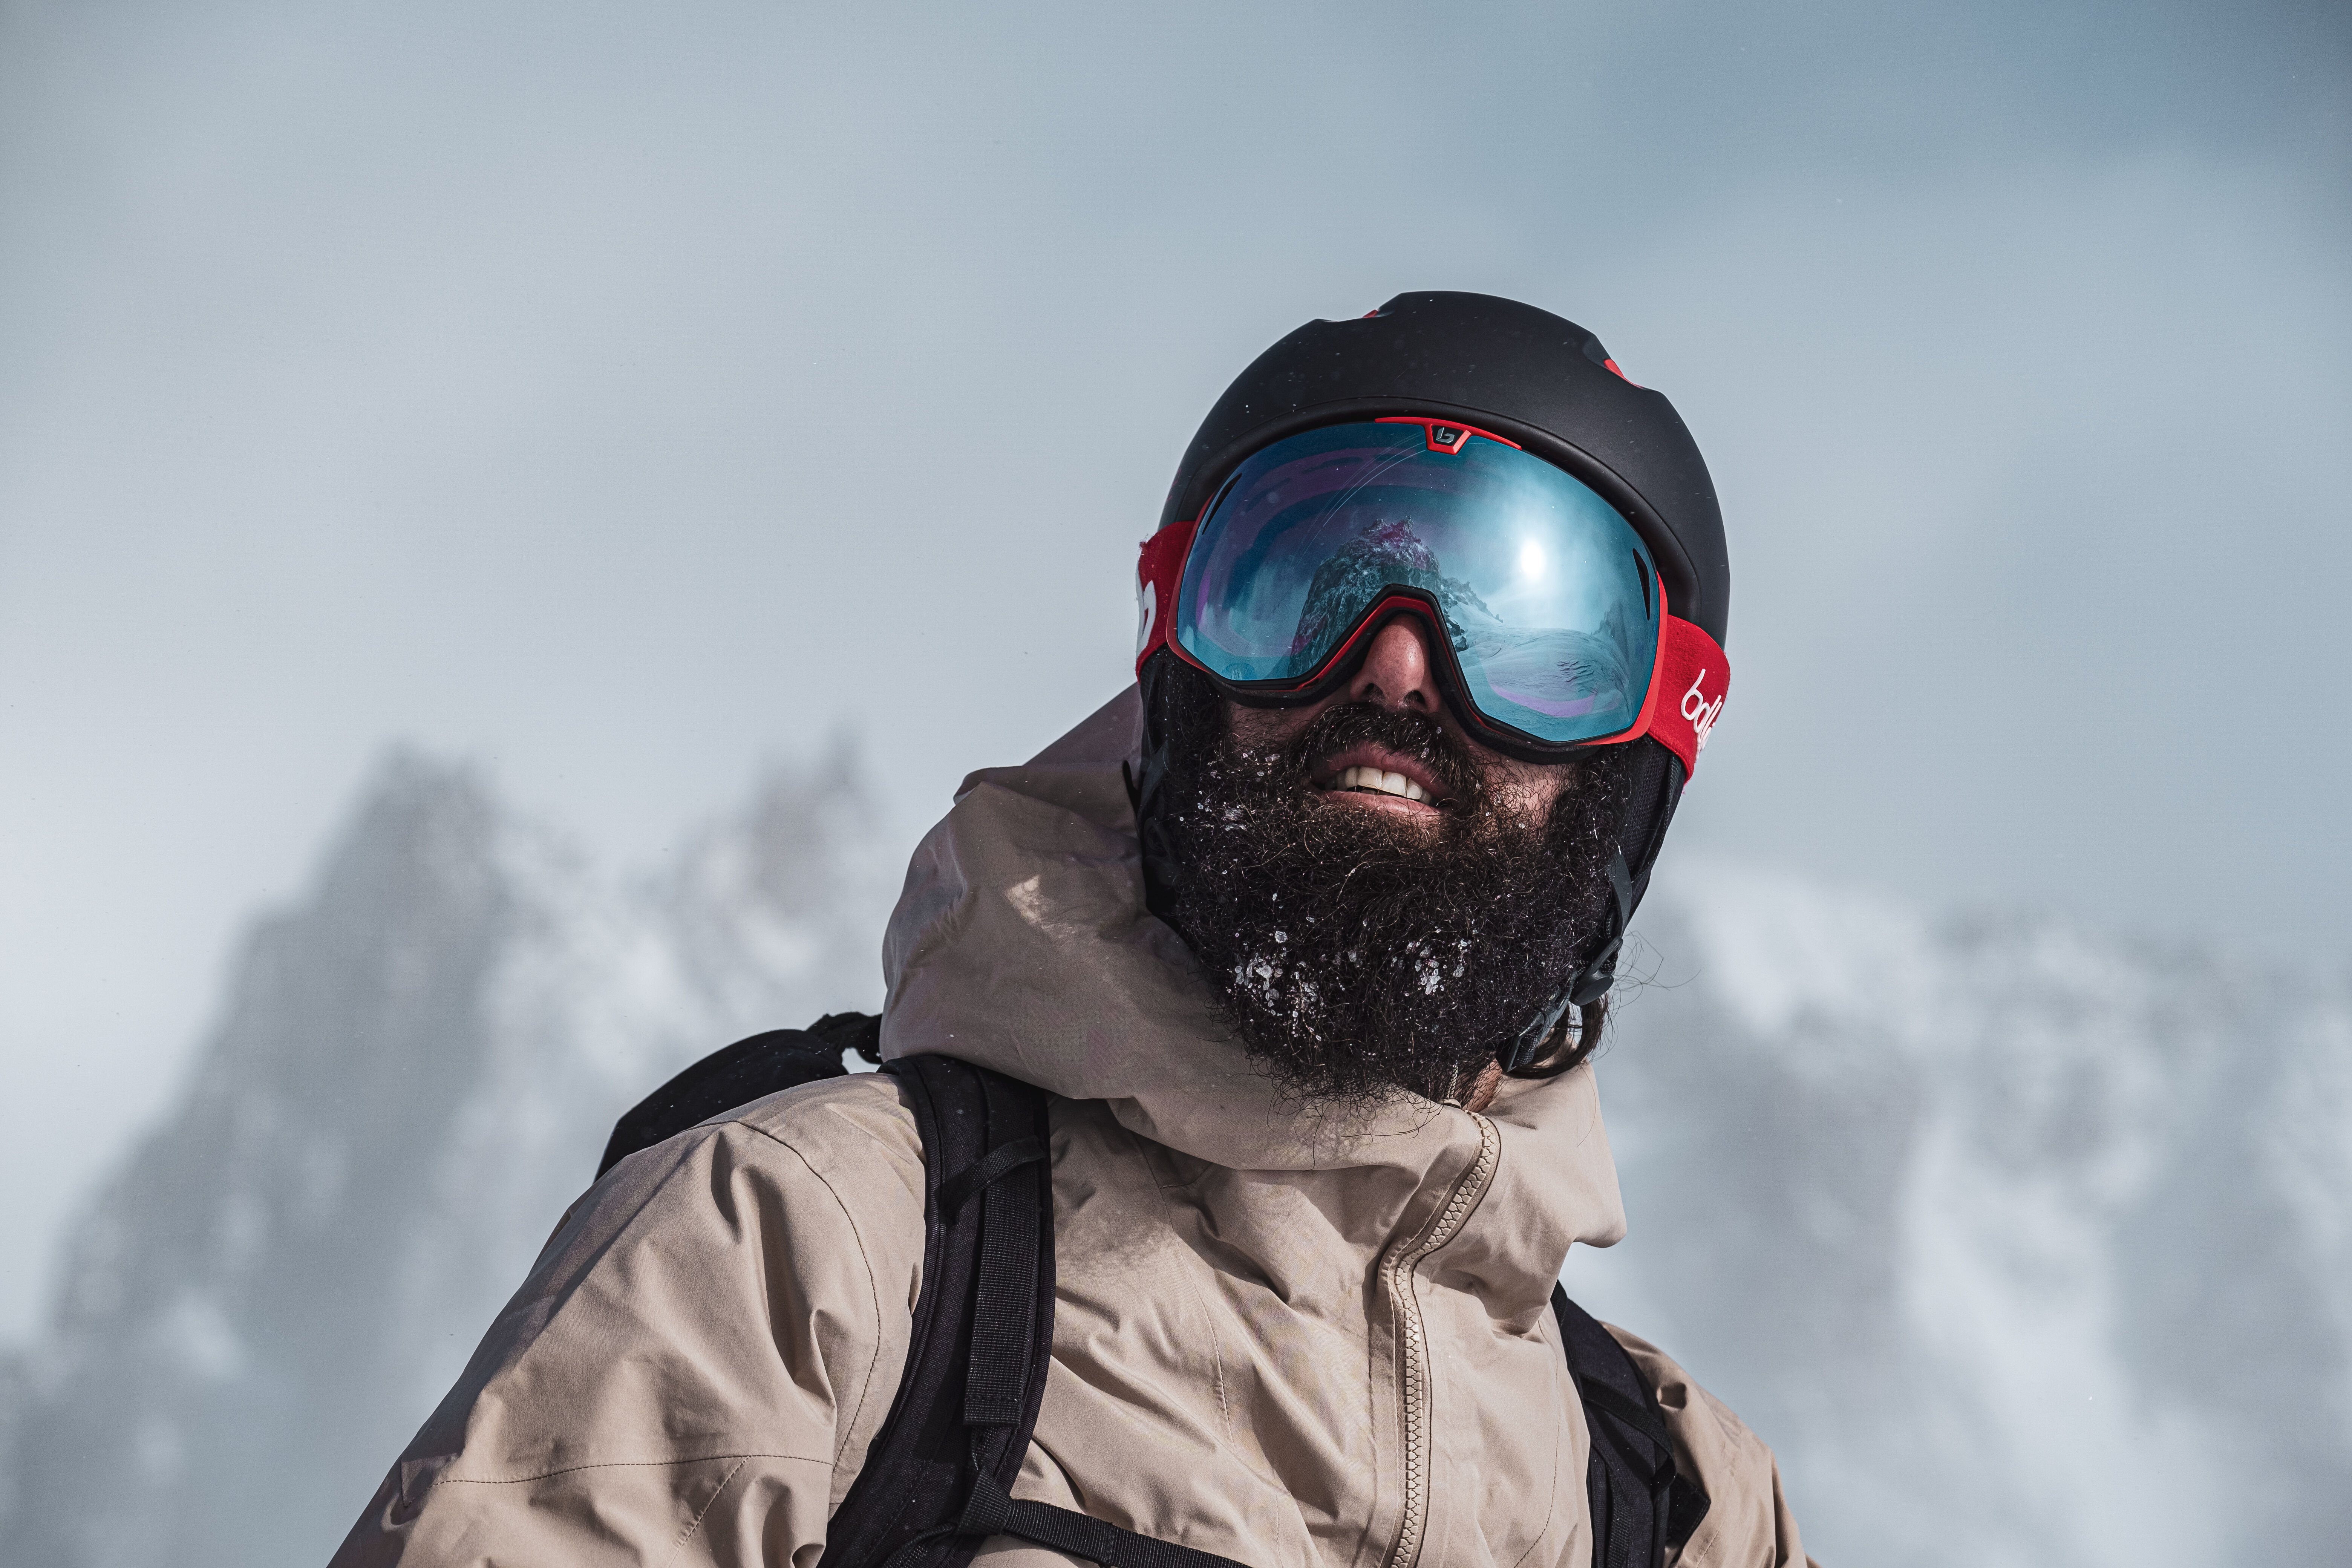 Masque de ski : comment choisir ? Nos conseils